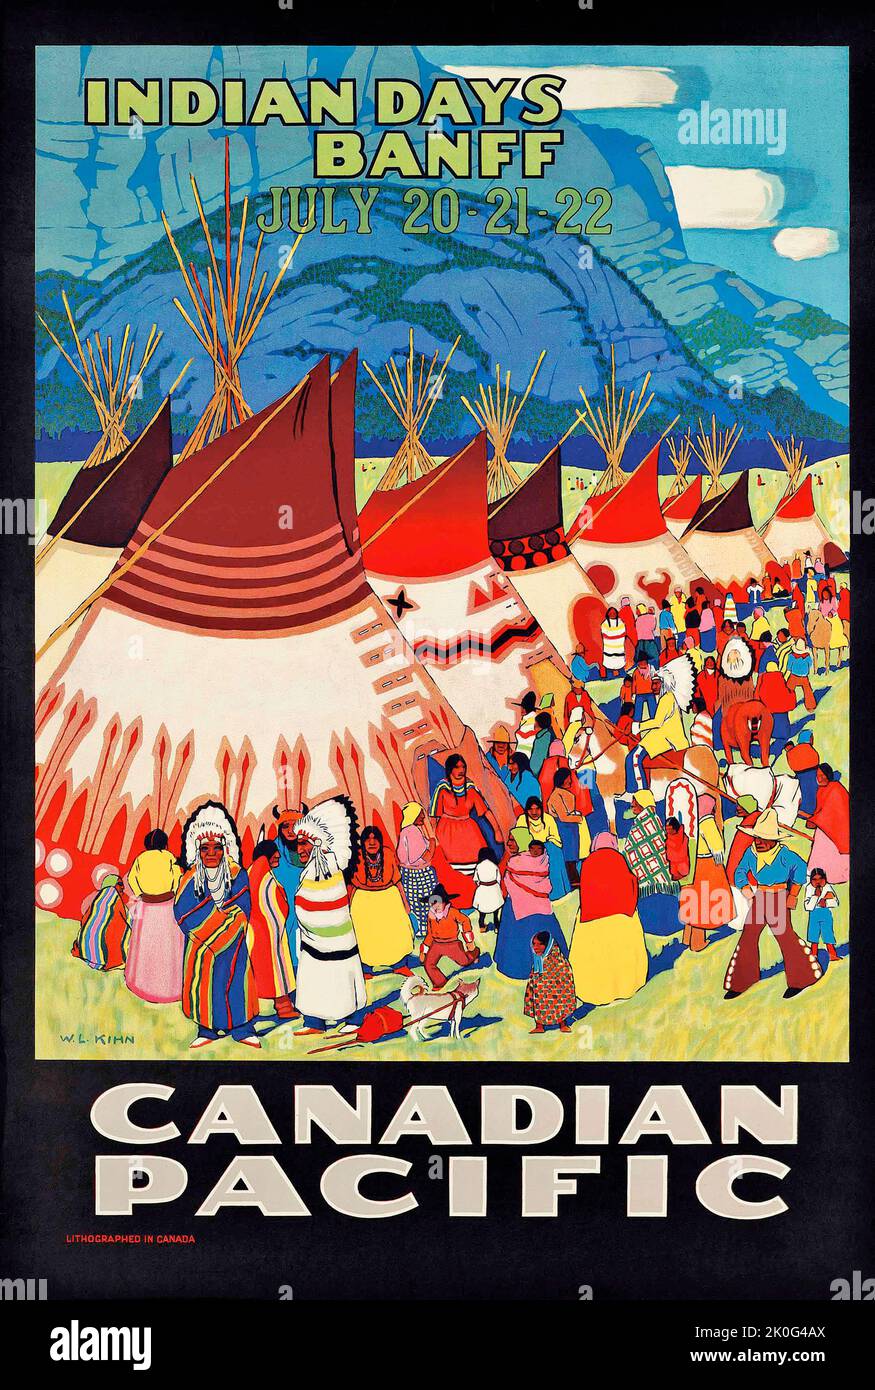 Wilfred Langdon Kihn - CANADIAN PACIFIC, INDIAN DAYS BANFF, 1925 - Native americans Stockfoto